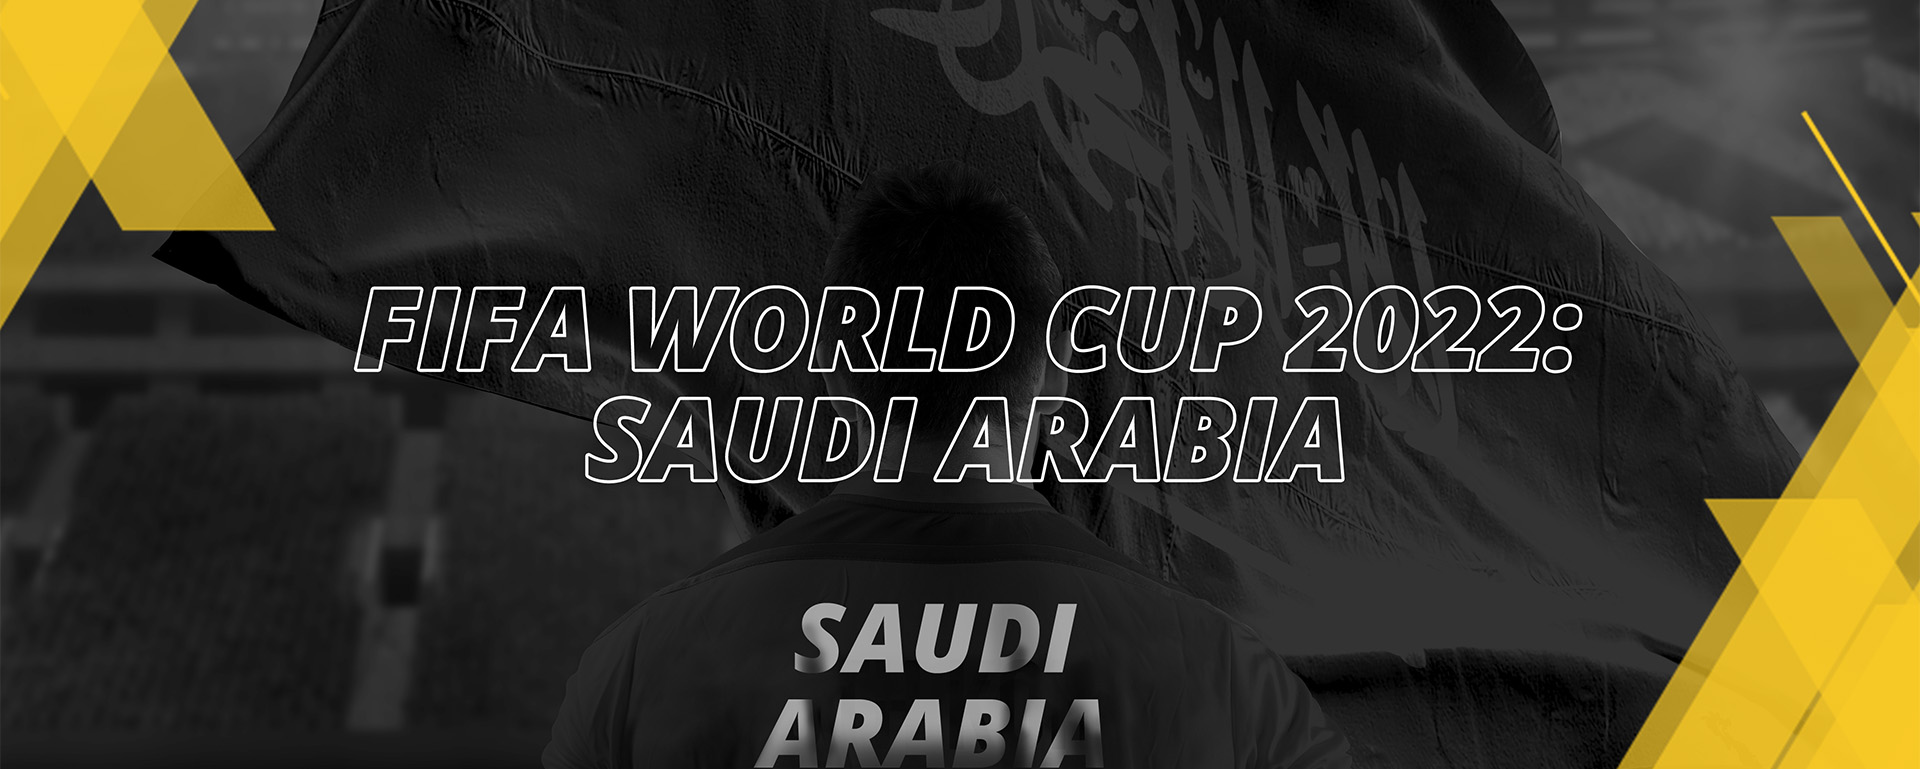 SAUDI ARABIA – FIFA WORLD CUP QATAR 2022 – FAN’S COMPENDIUM